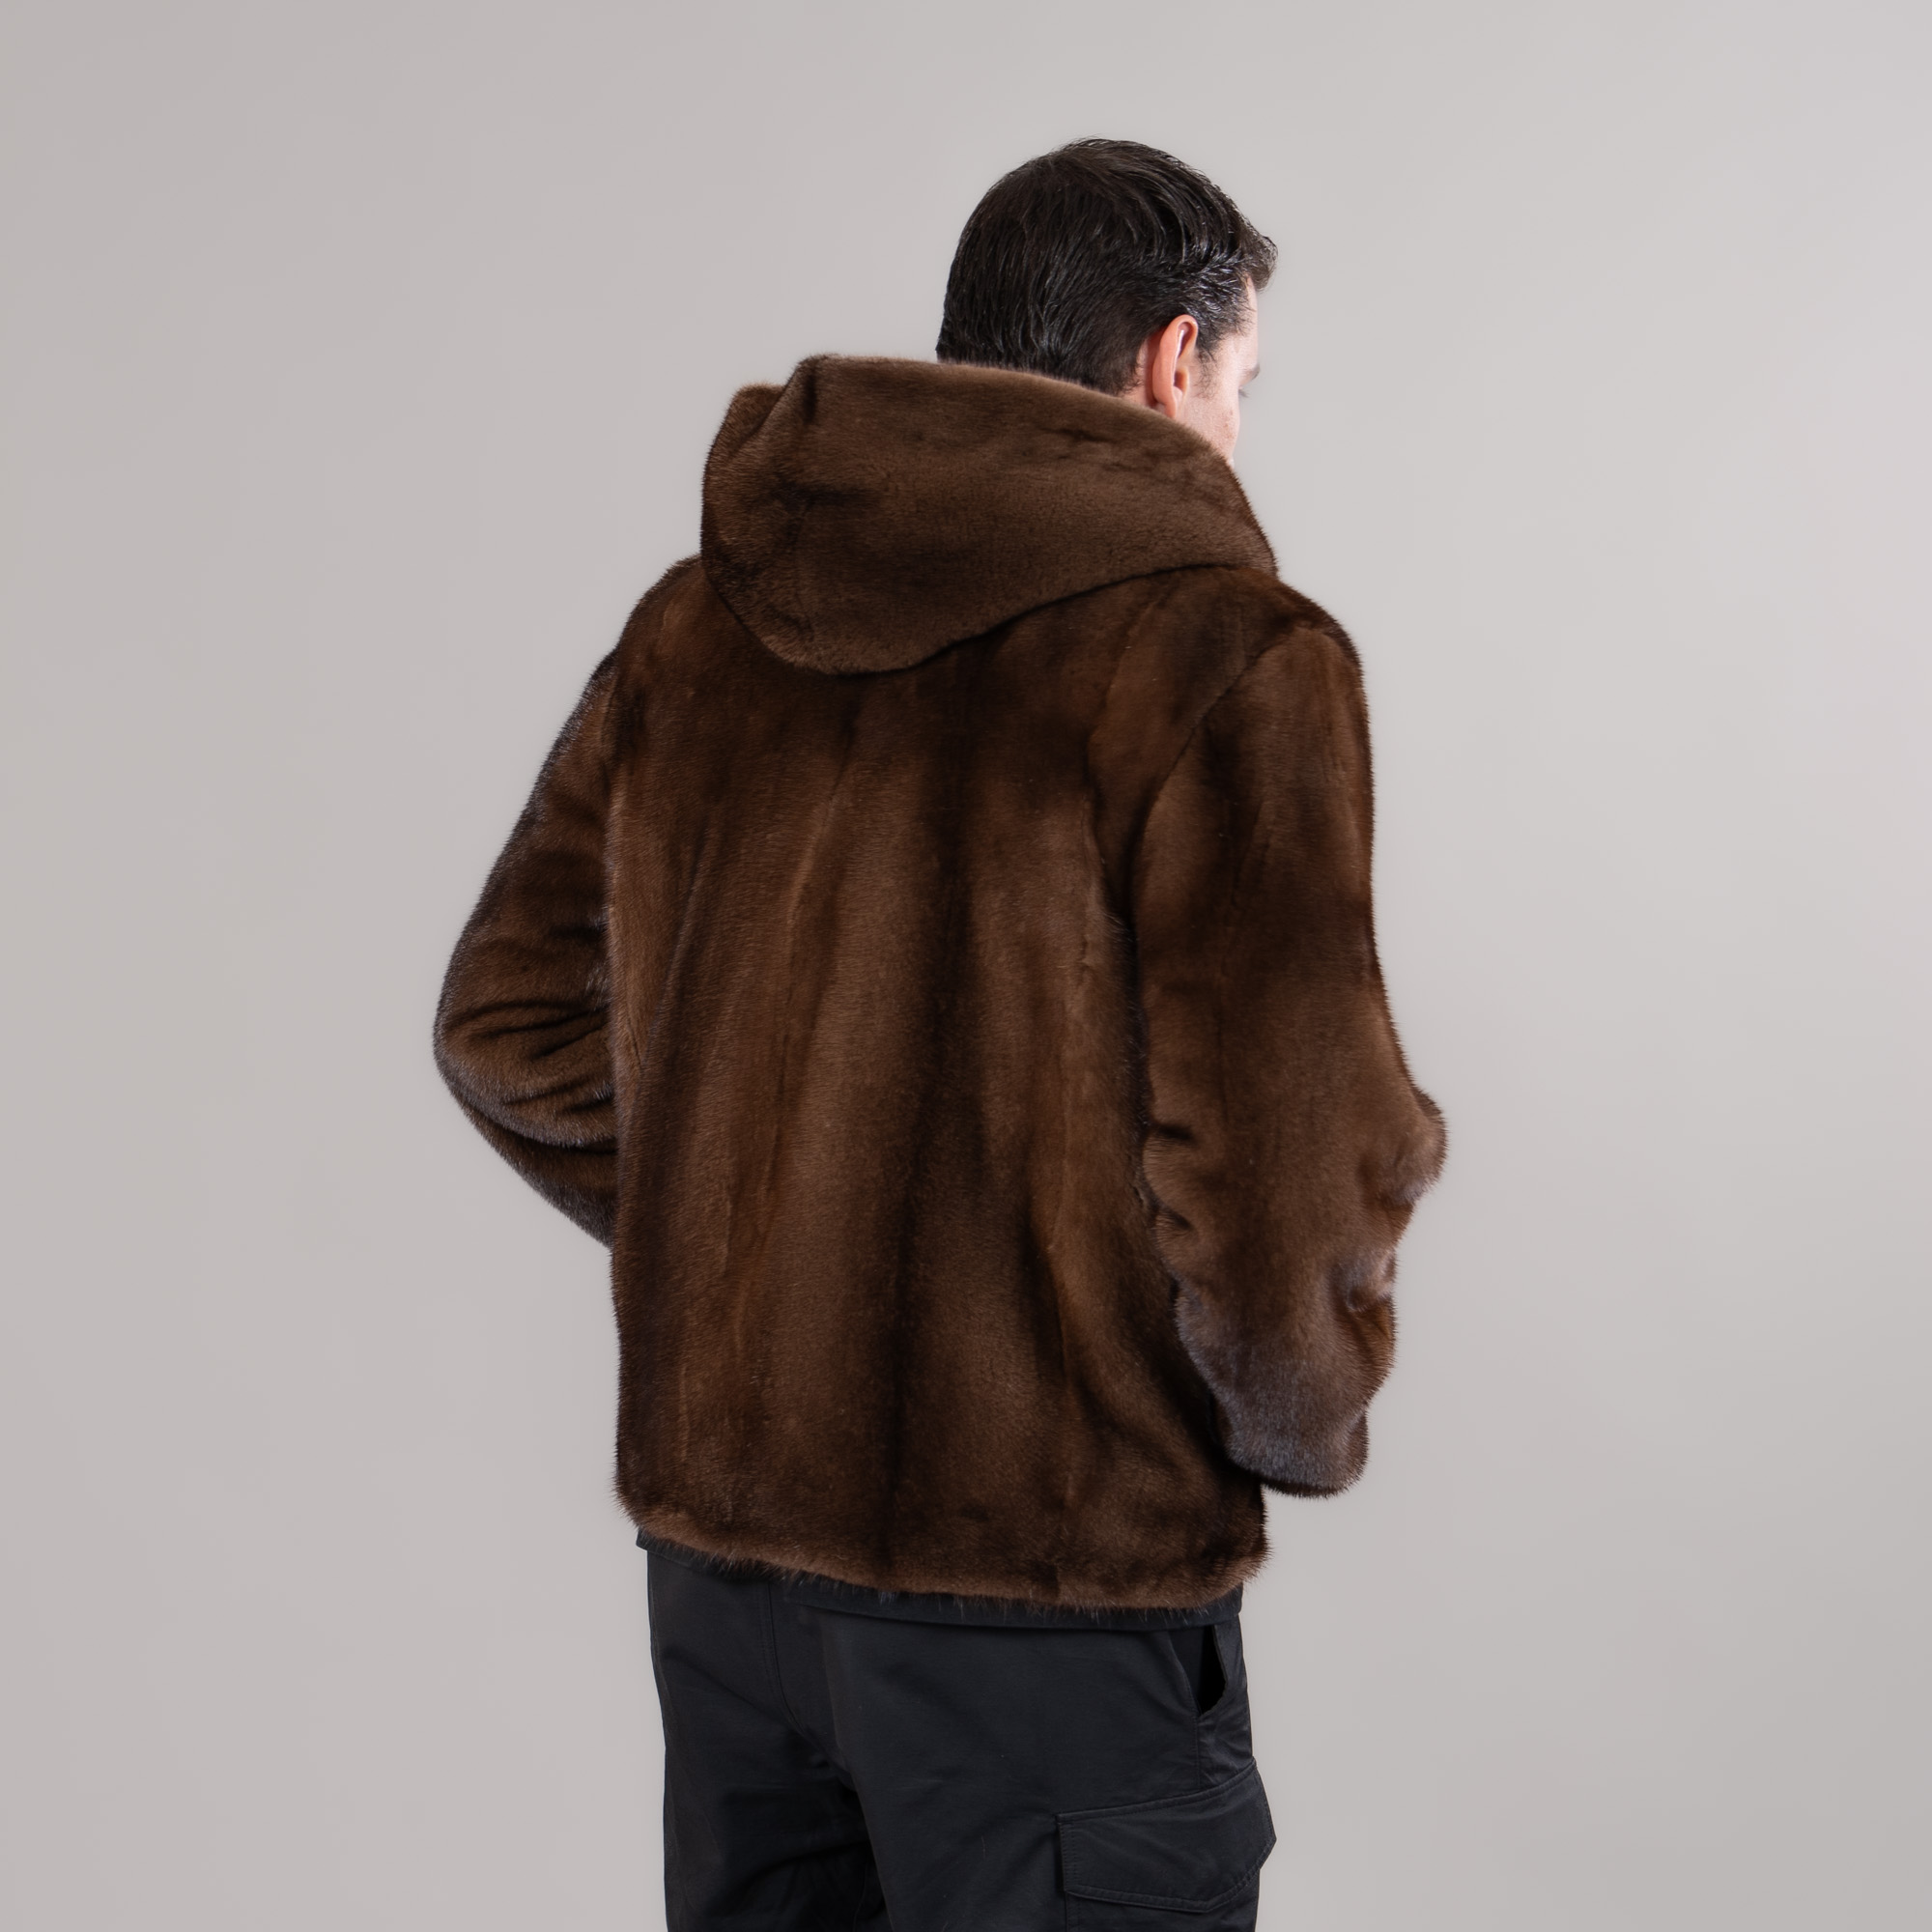 Brown mink fur jacket with a hood